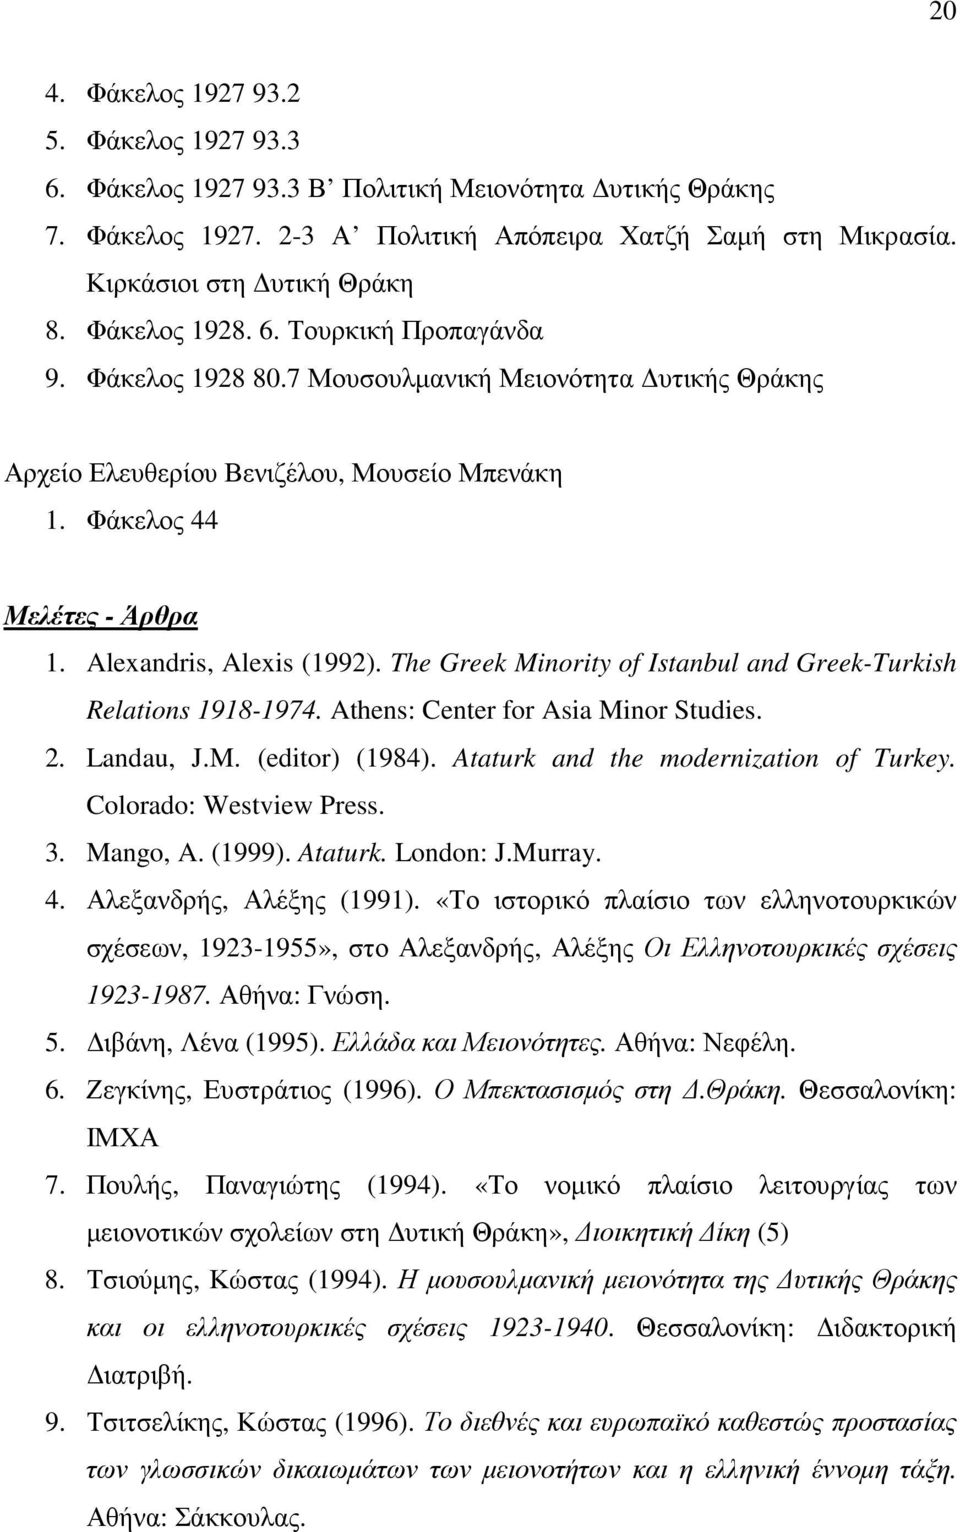 Alexandris, Alexis (1992). The Greek Minority of Istanbul and Greek-Turkish Relations 1918-1974. Athens: Center for Asia Minor Studies. 2. Landau, J.M. (editor) (1984).